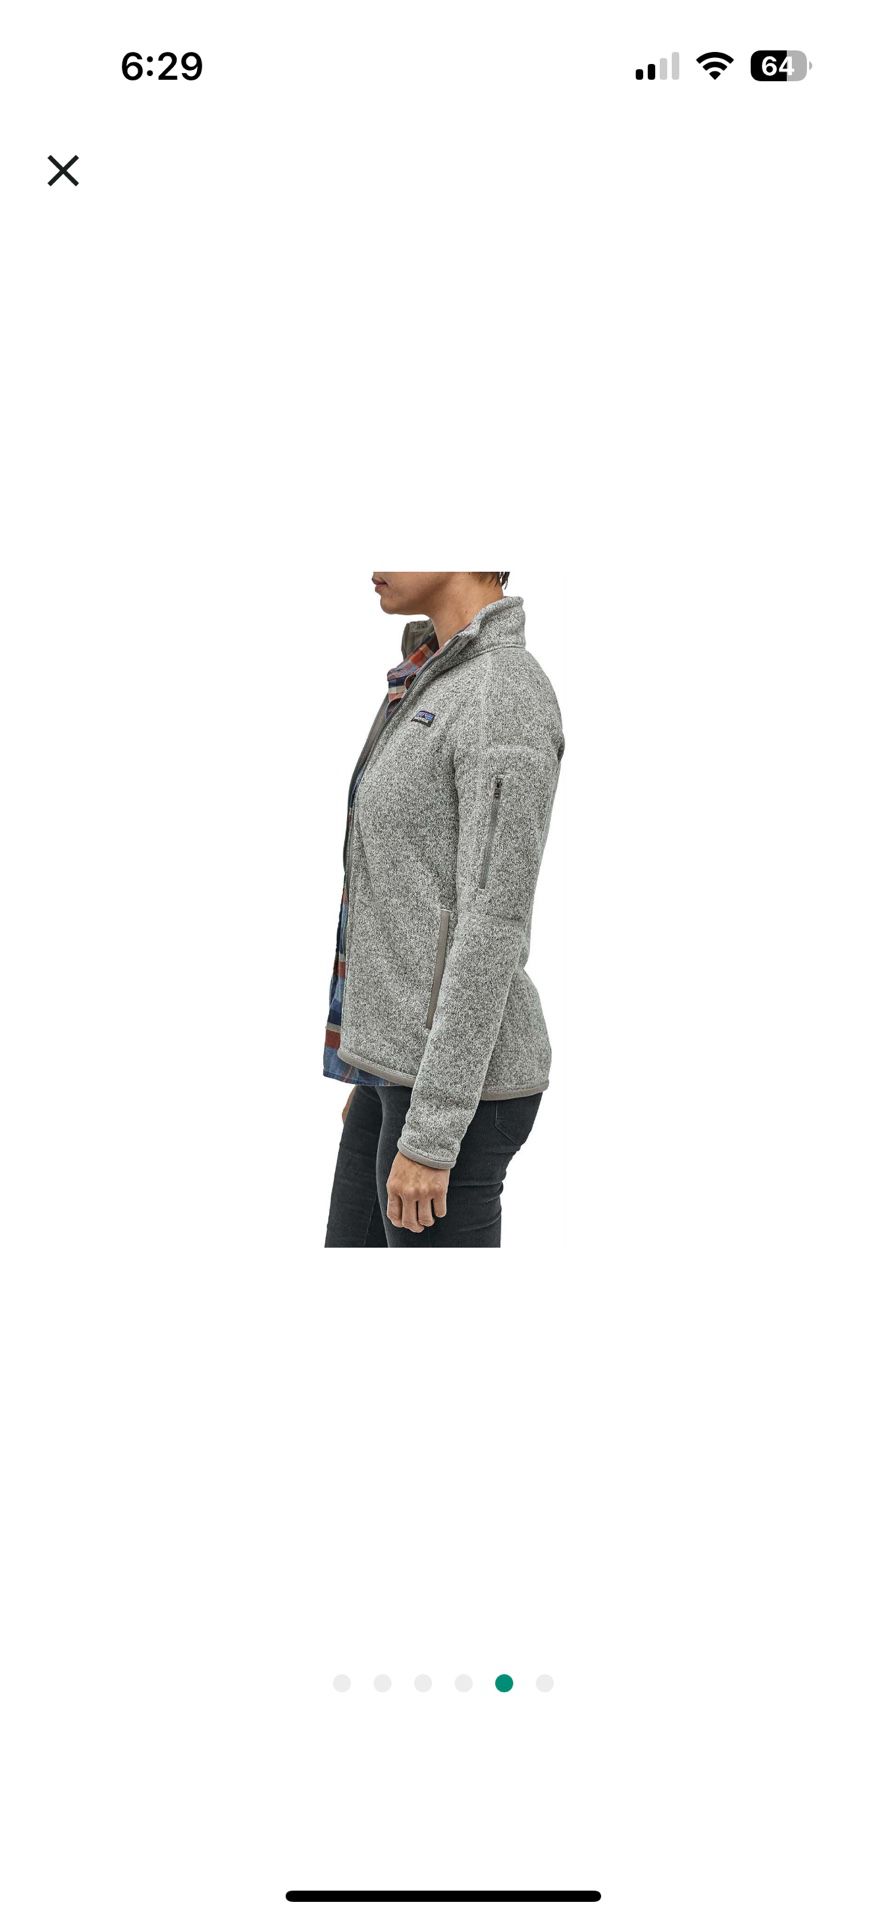 Patagonia Women’s Jacket (small)